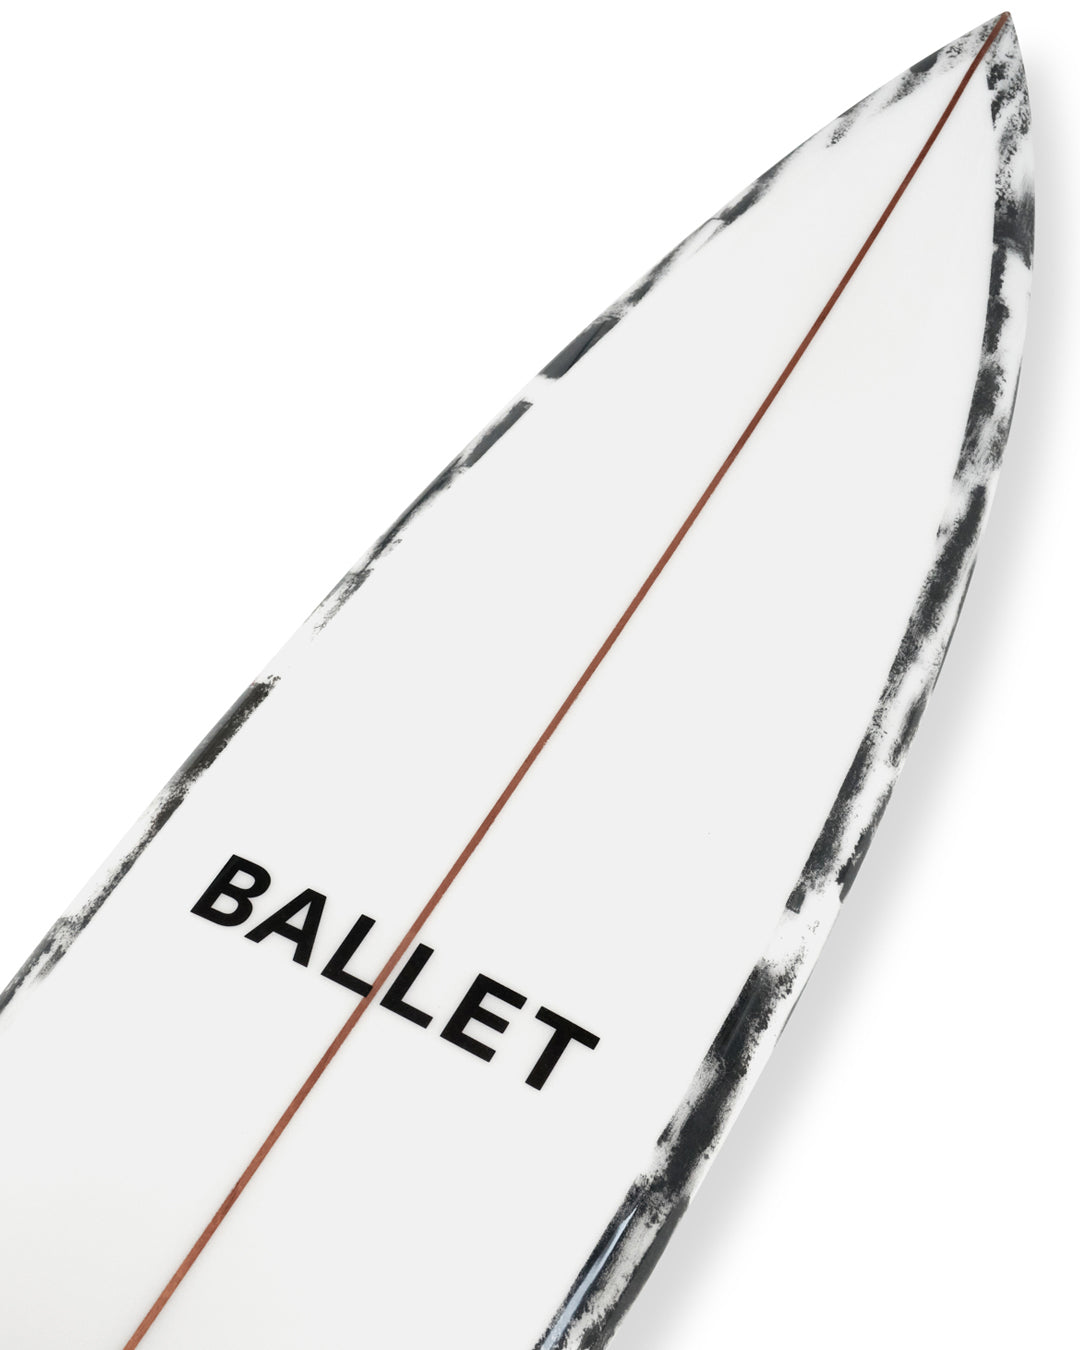 BALLET x PATRICK THOMAS SURFBOARD #003